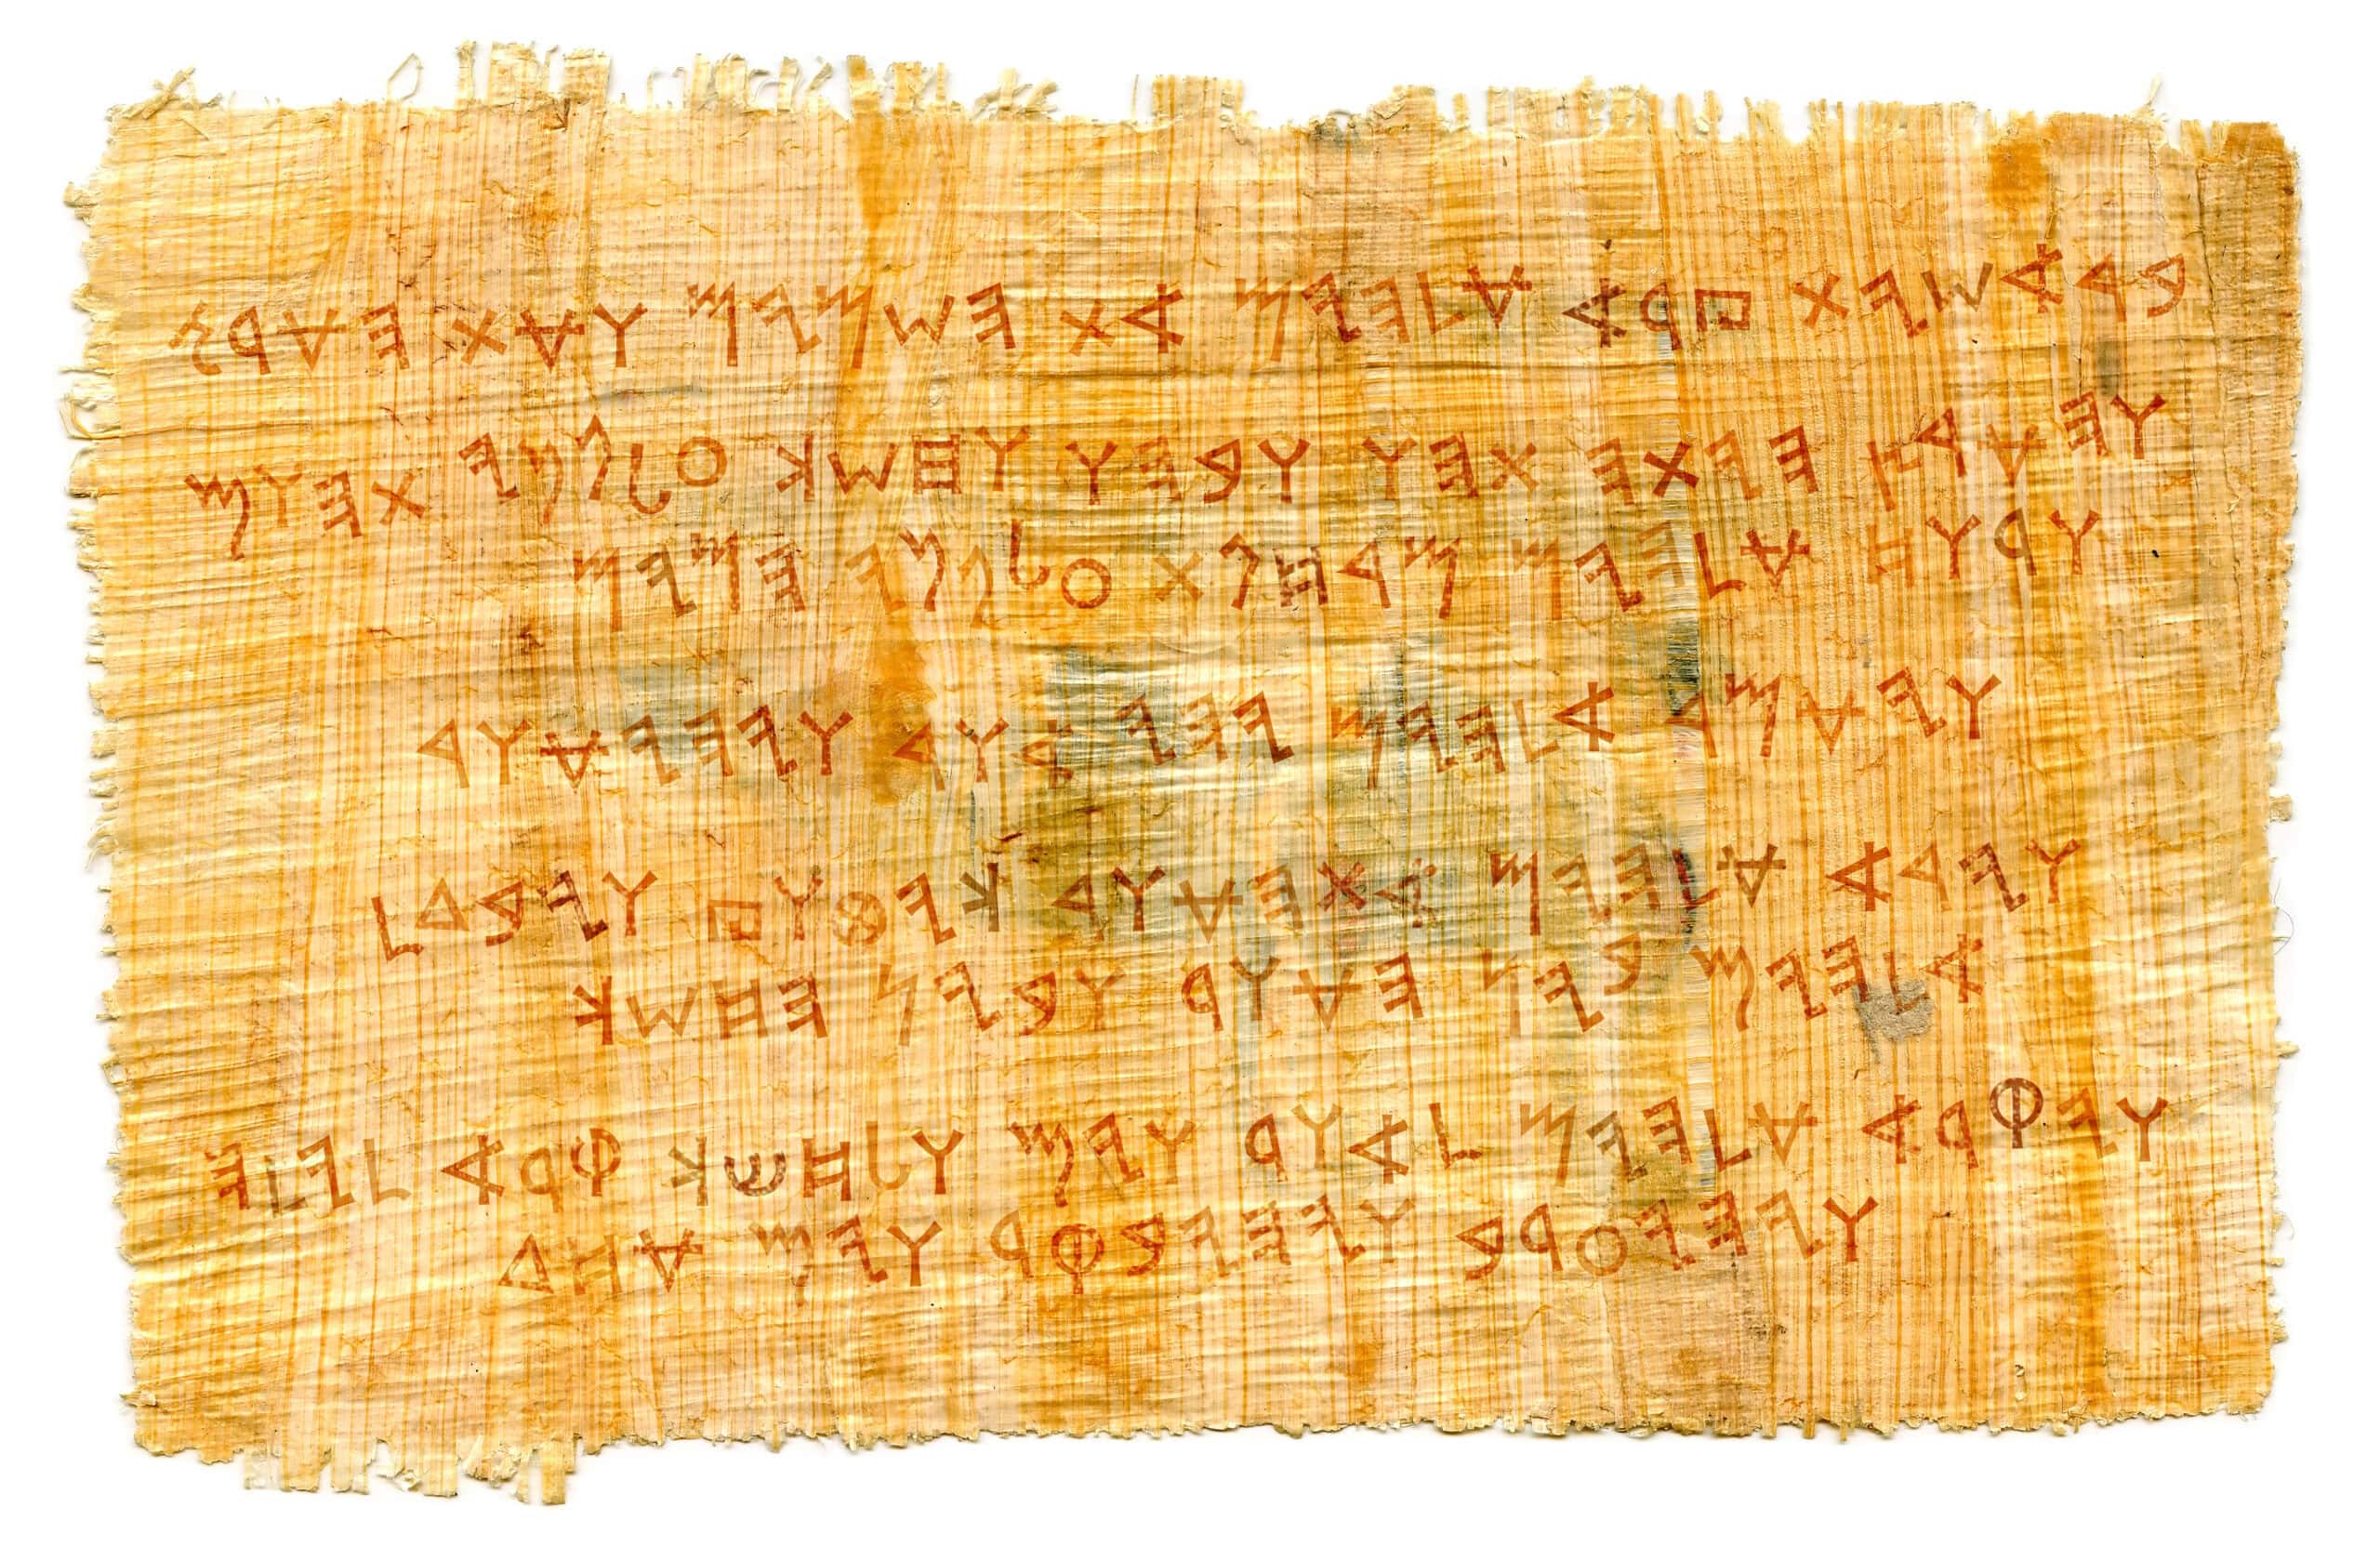 Phoenician writing